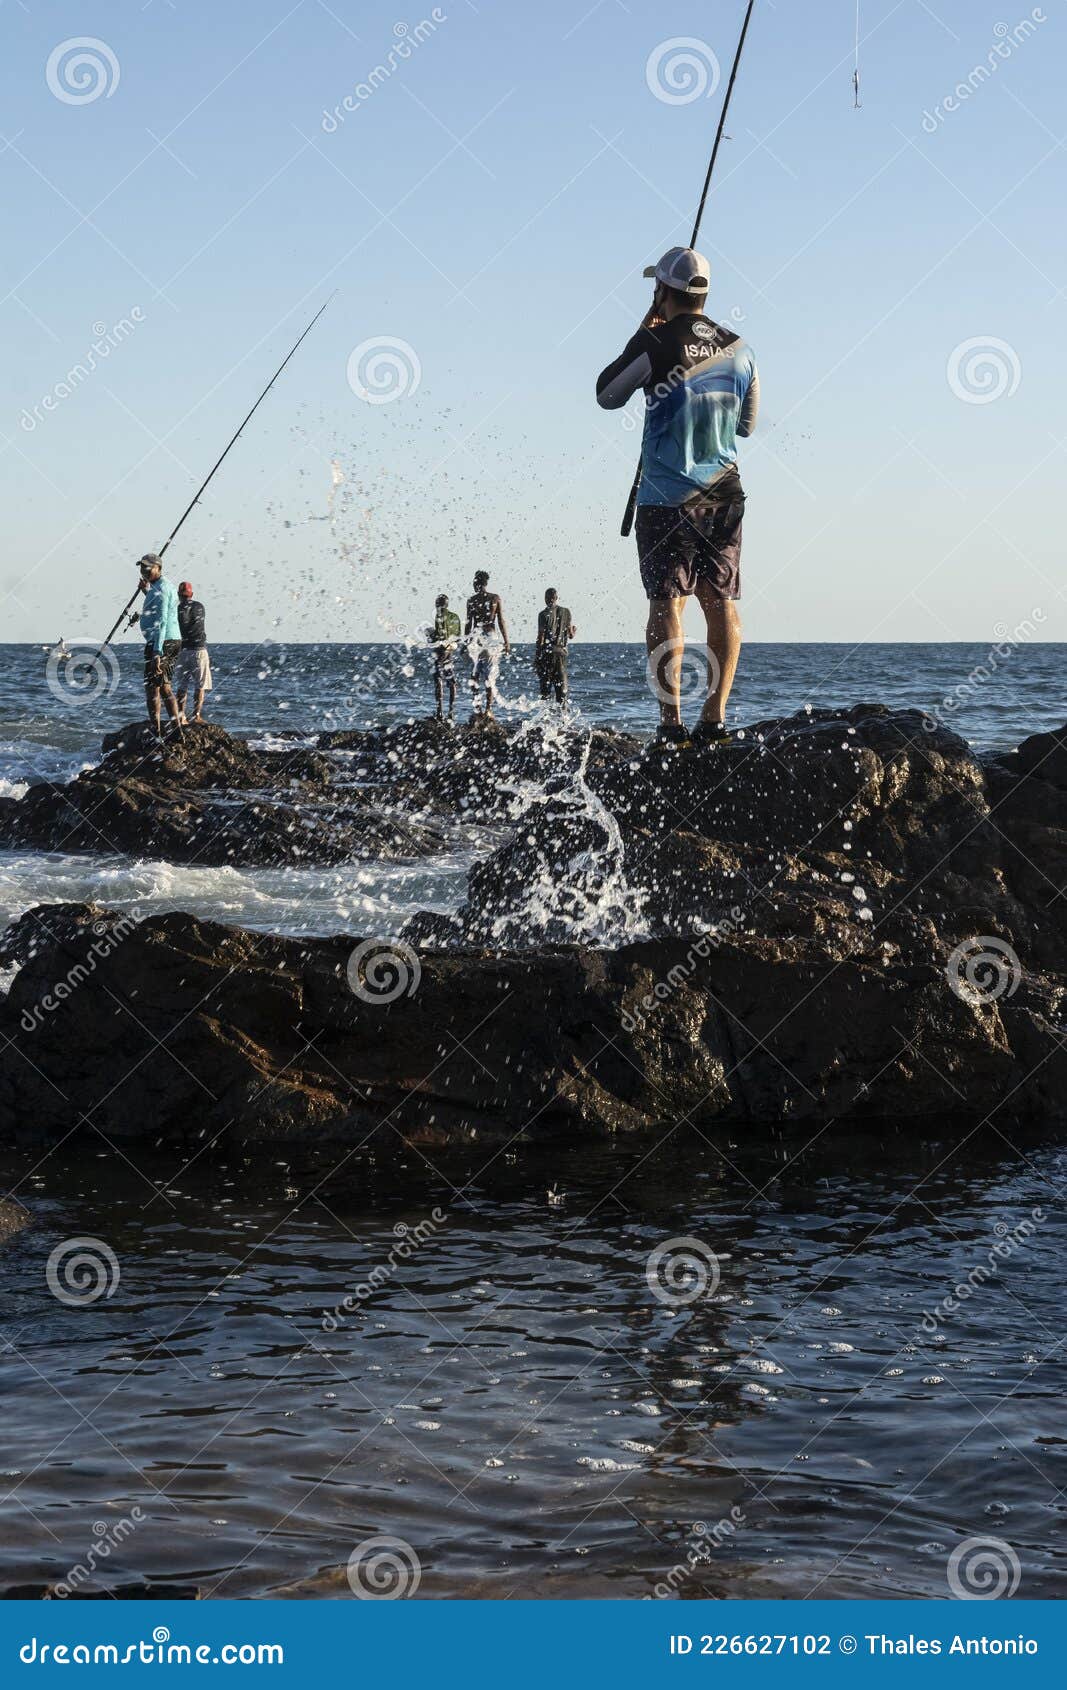 https://thumbs.dreamstime.com/z/salvador-bahia-brazil-april-fishermen-rocks-their-fishing-poles-trying-to-catch-fish-to-sell-consume-fishermen-226627102.jpg